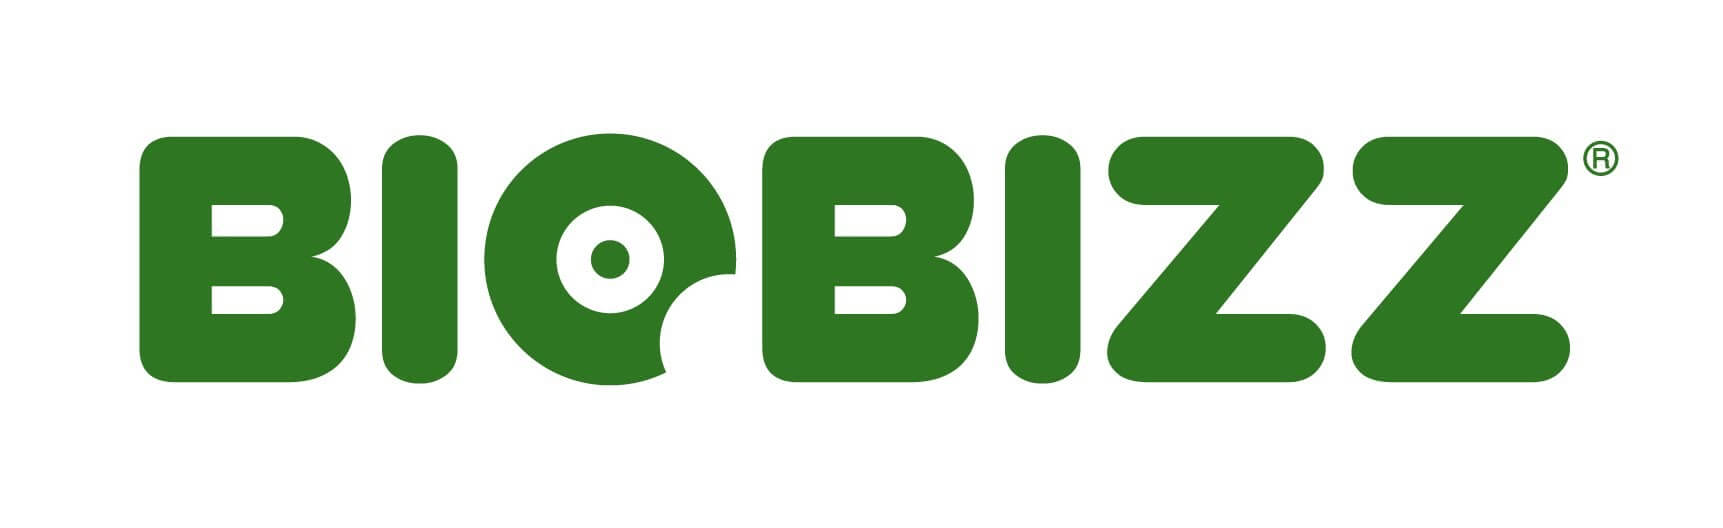 Biobizz - Growth Technology